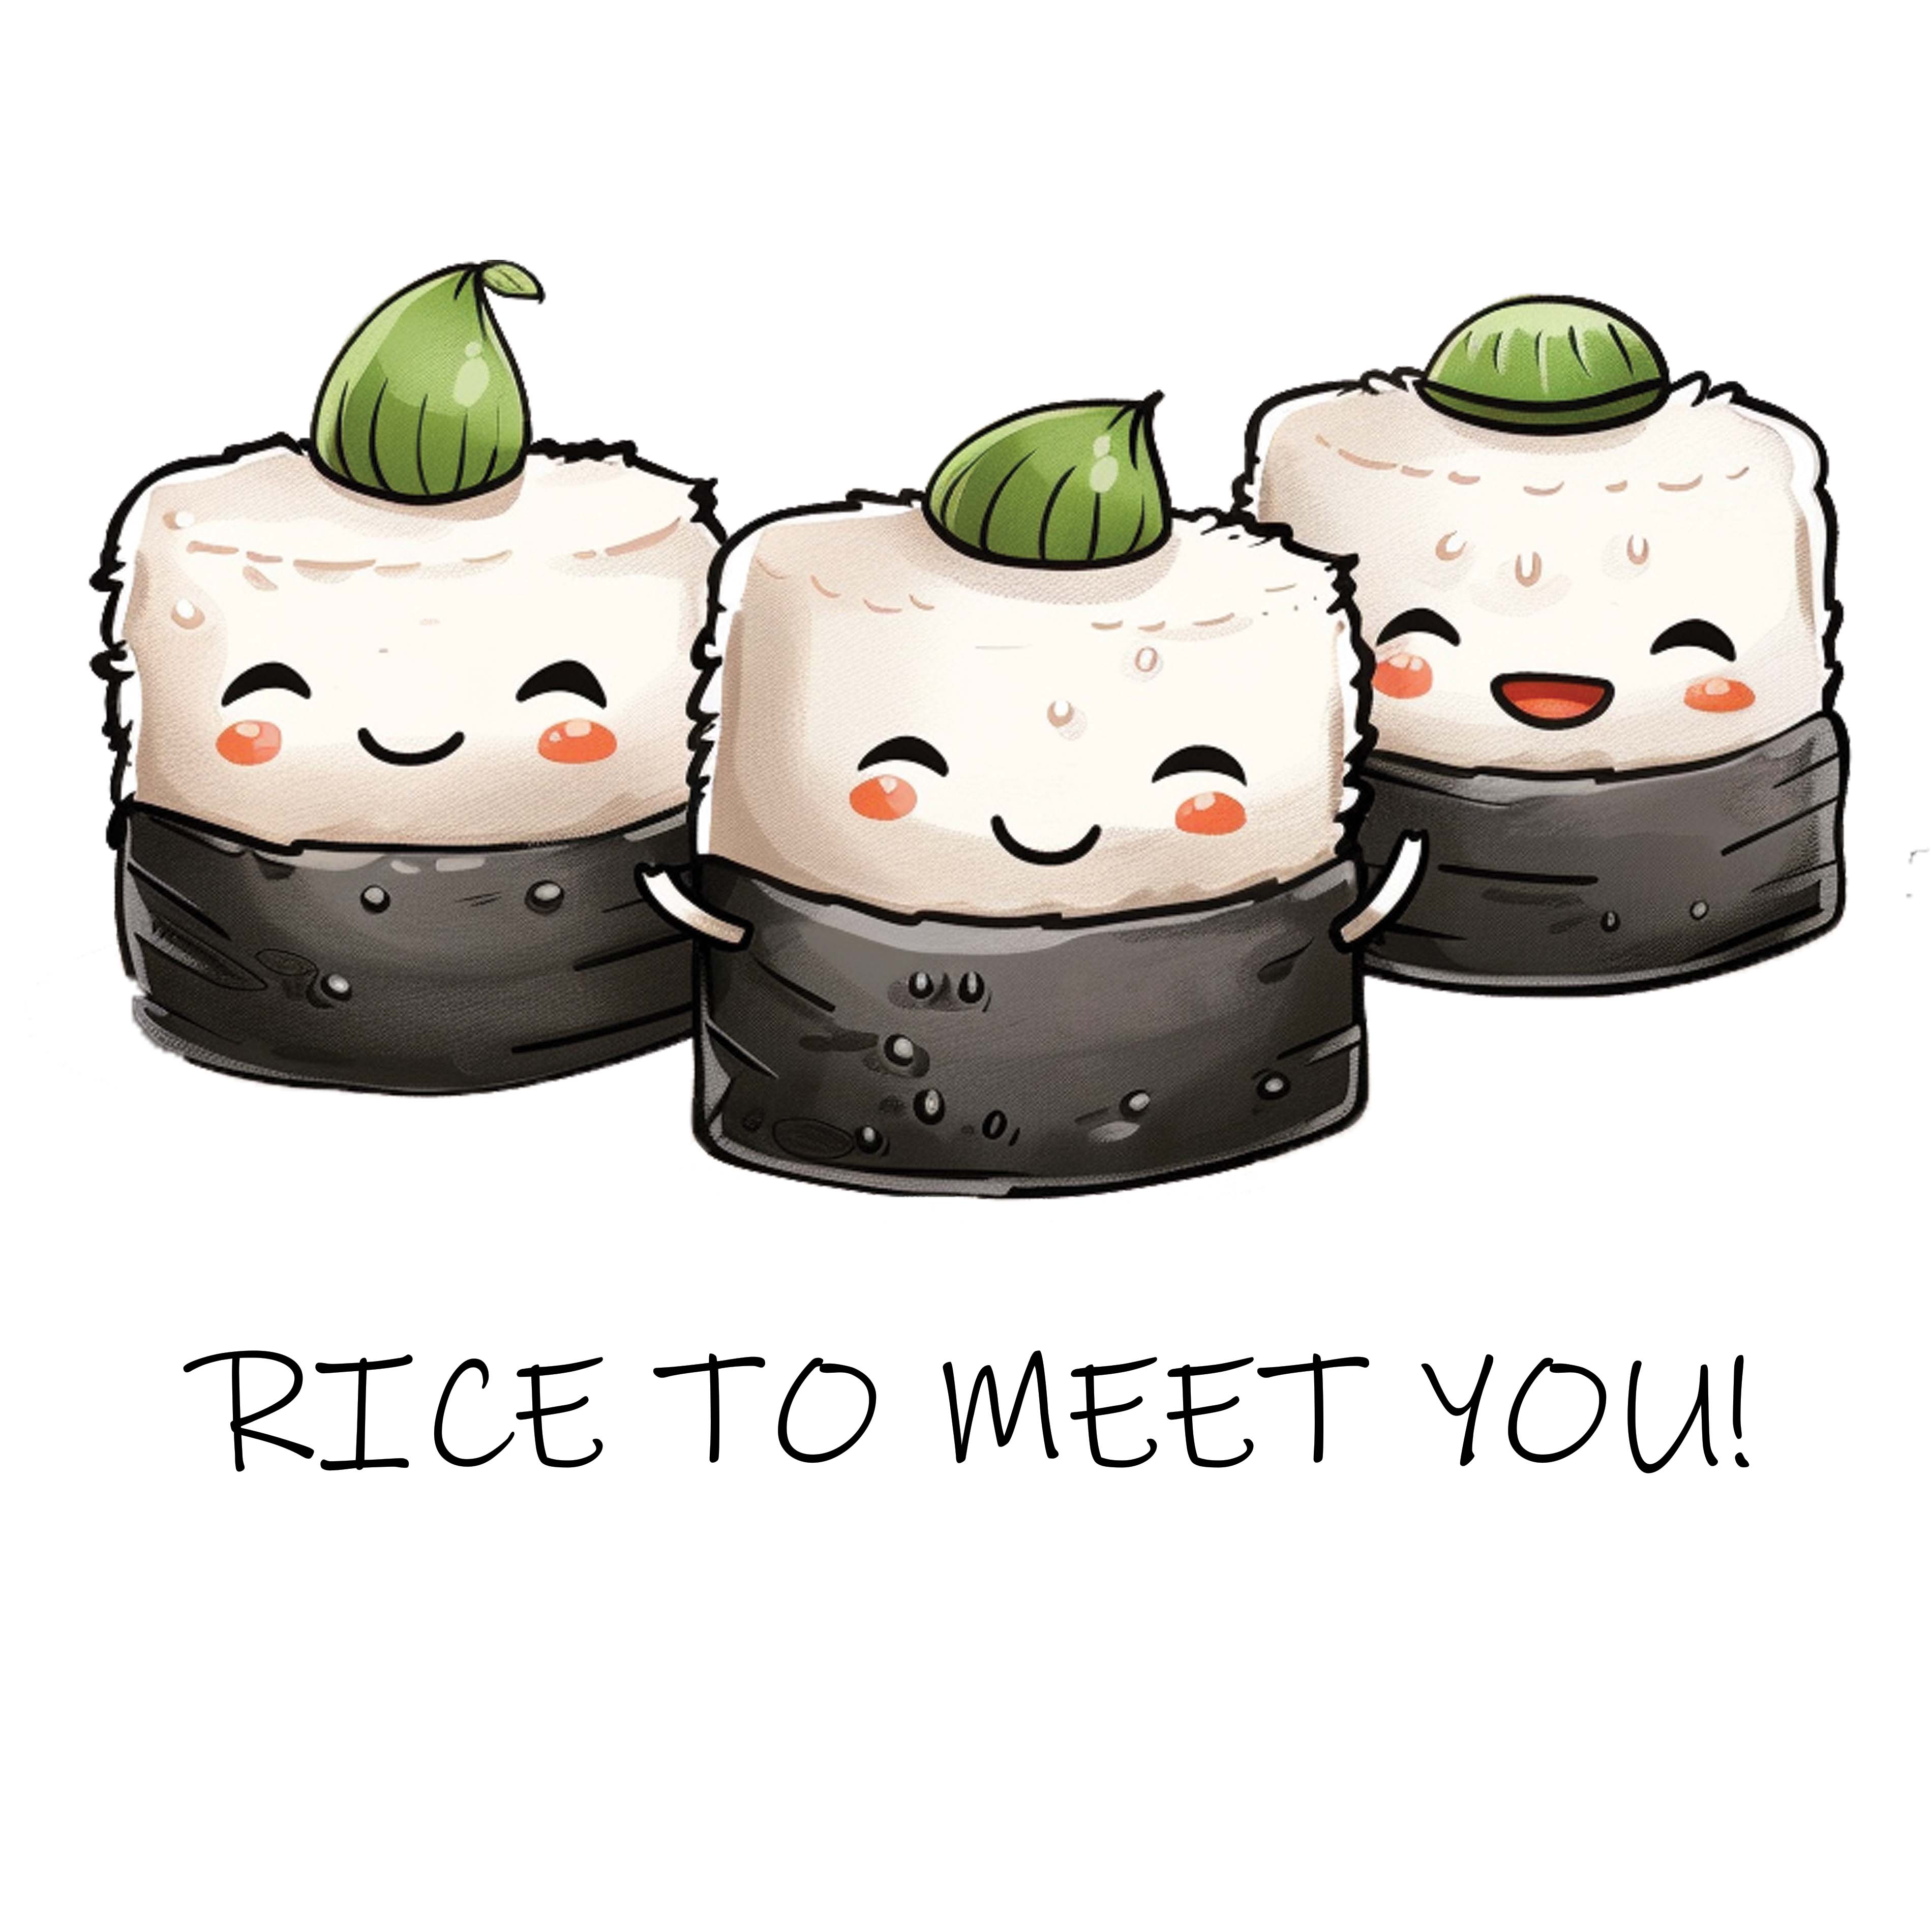 Unisex t-shirt - Rice To Meet You